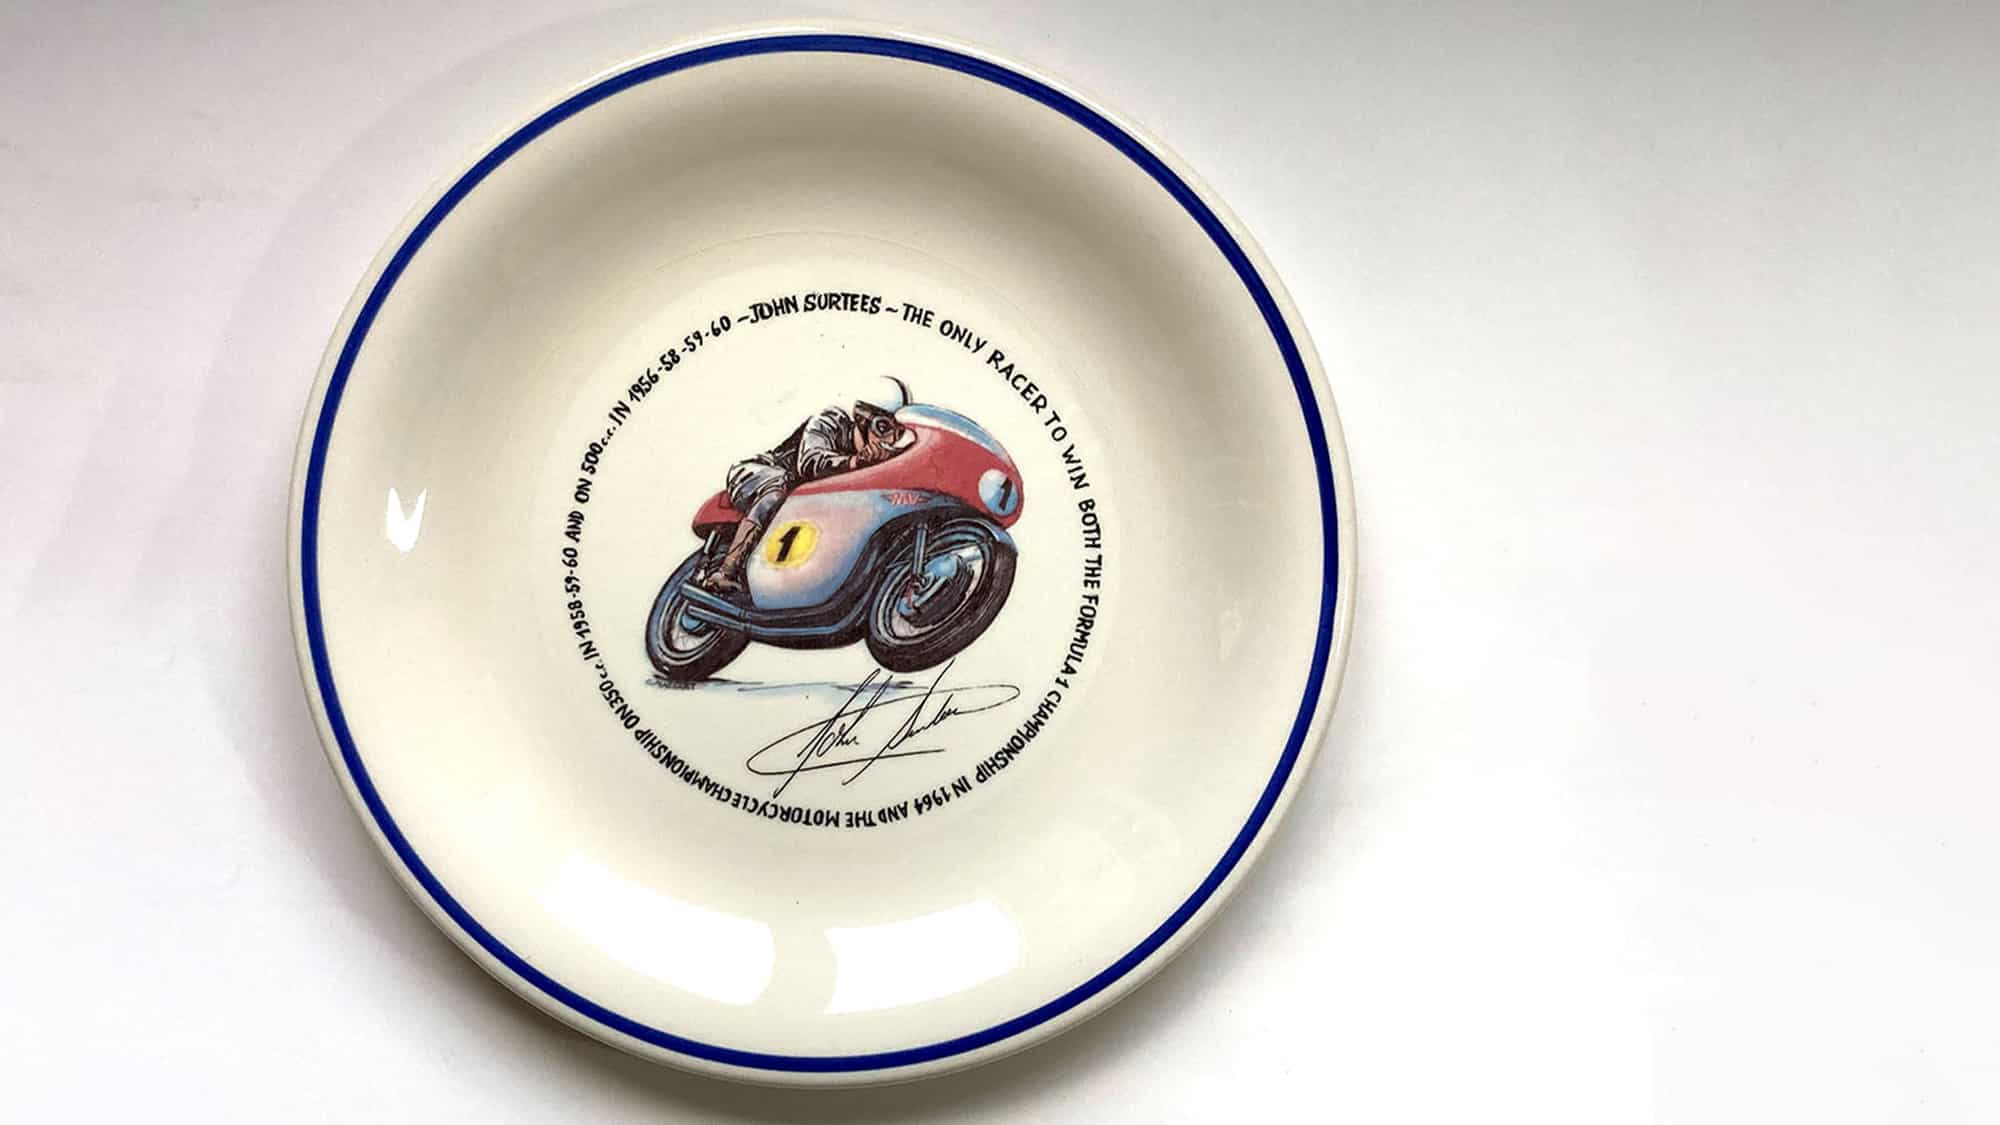 John Surtees dinner service plate